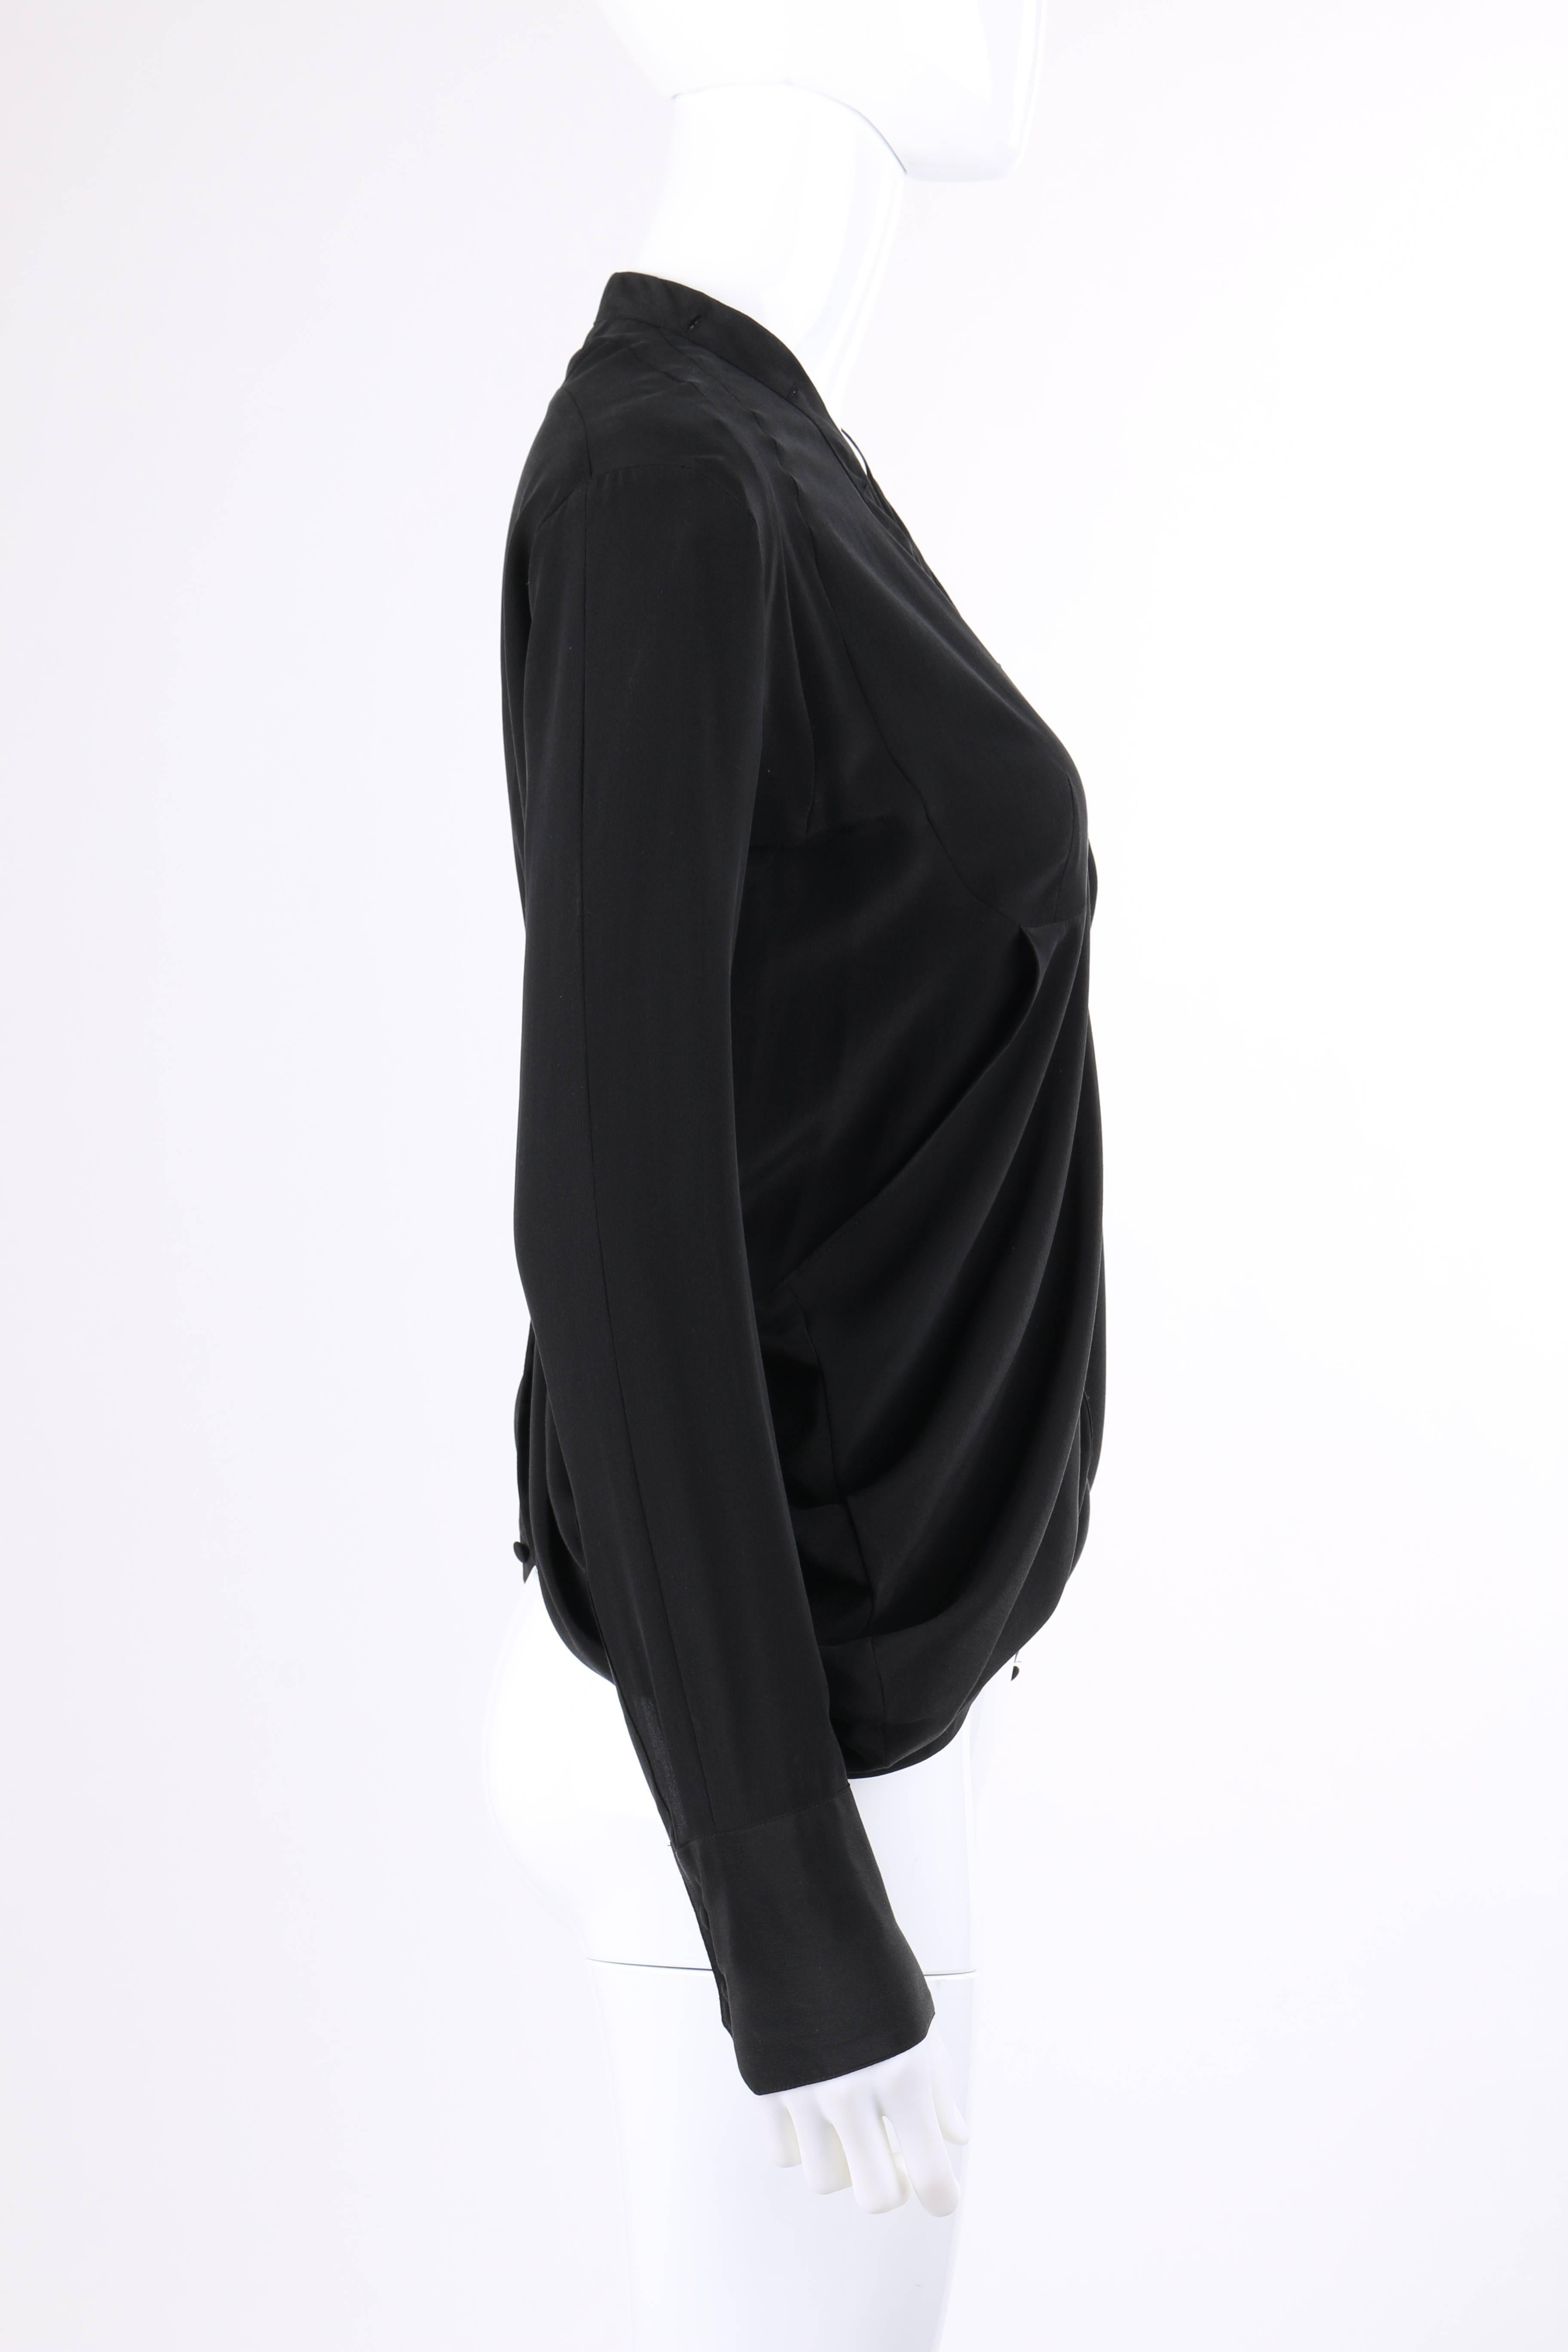 Women's BALENCIAGA A/W 2009 Black Silk Asymmetrical Draped Button Front Blouse Top